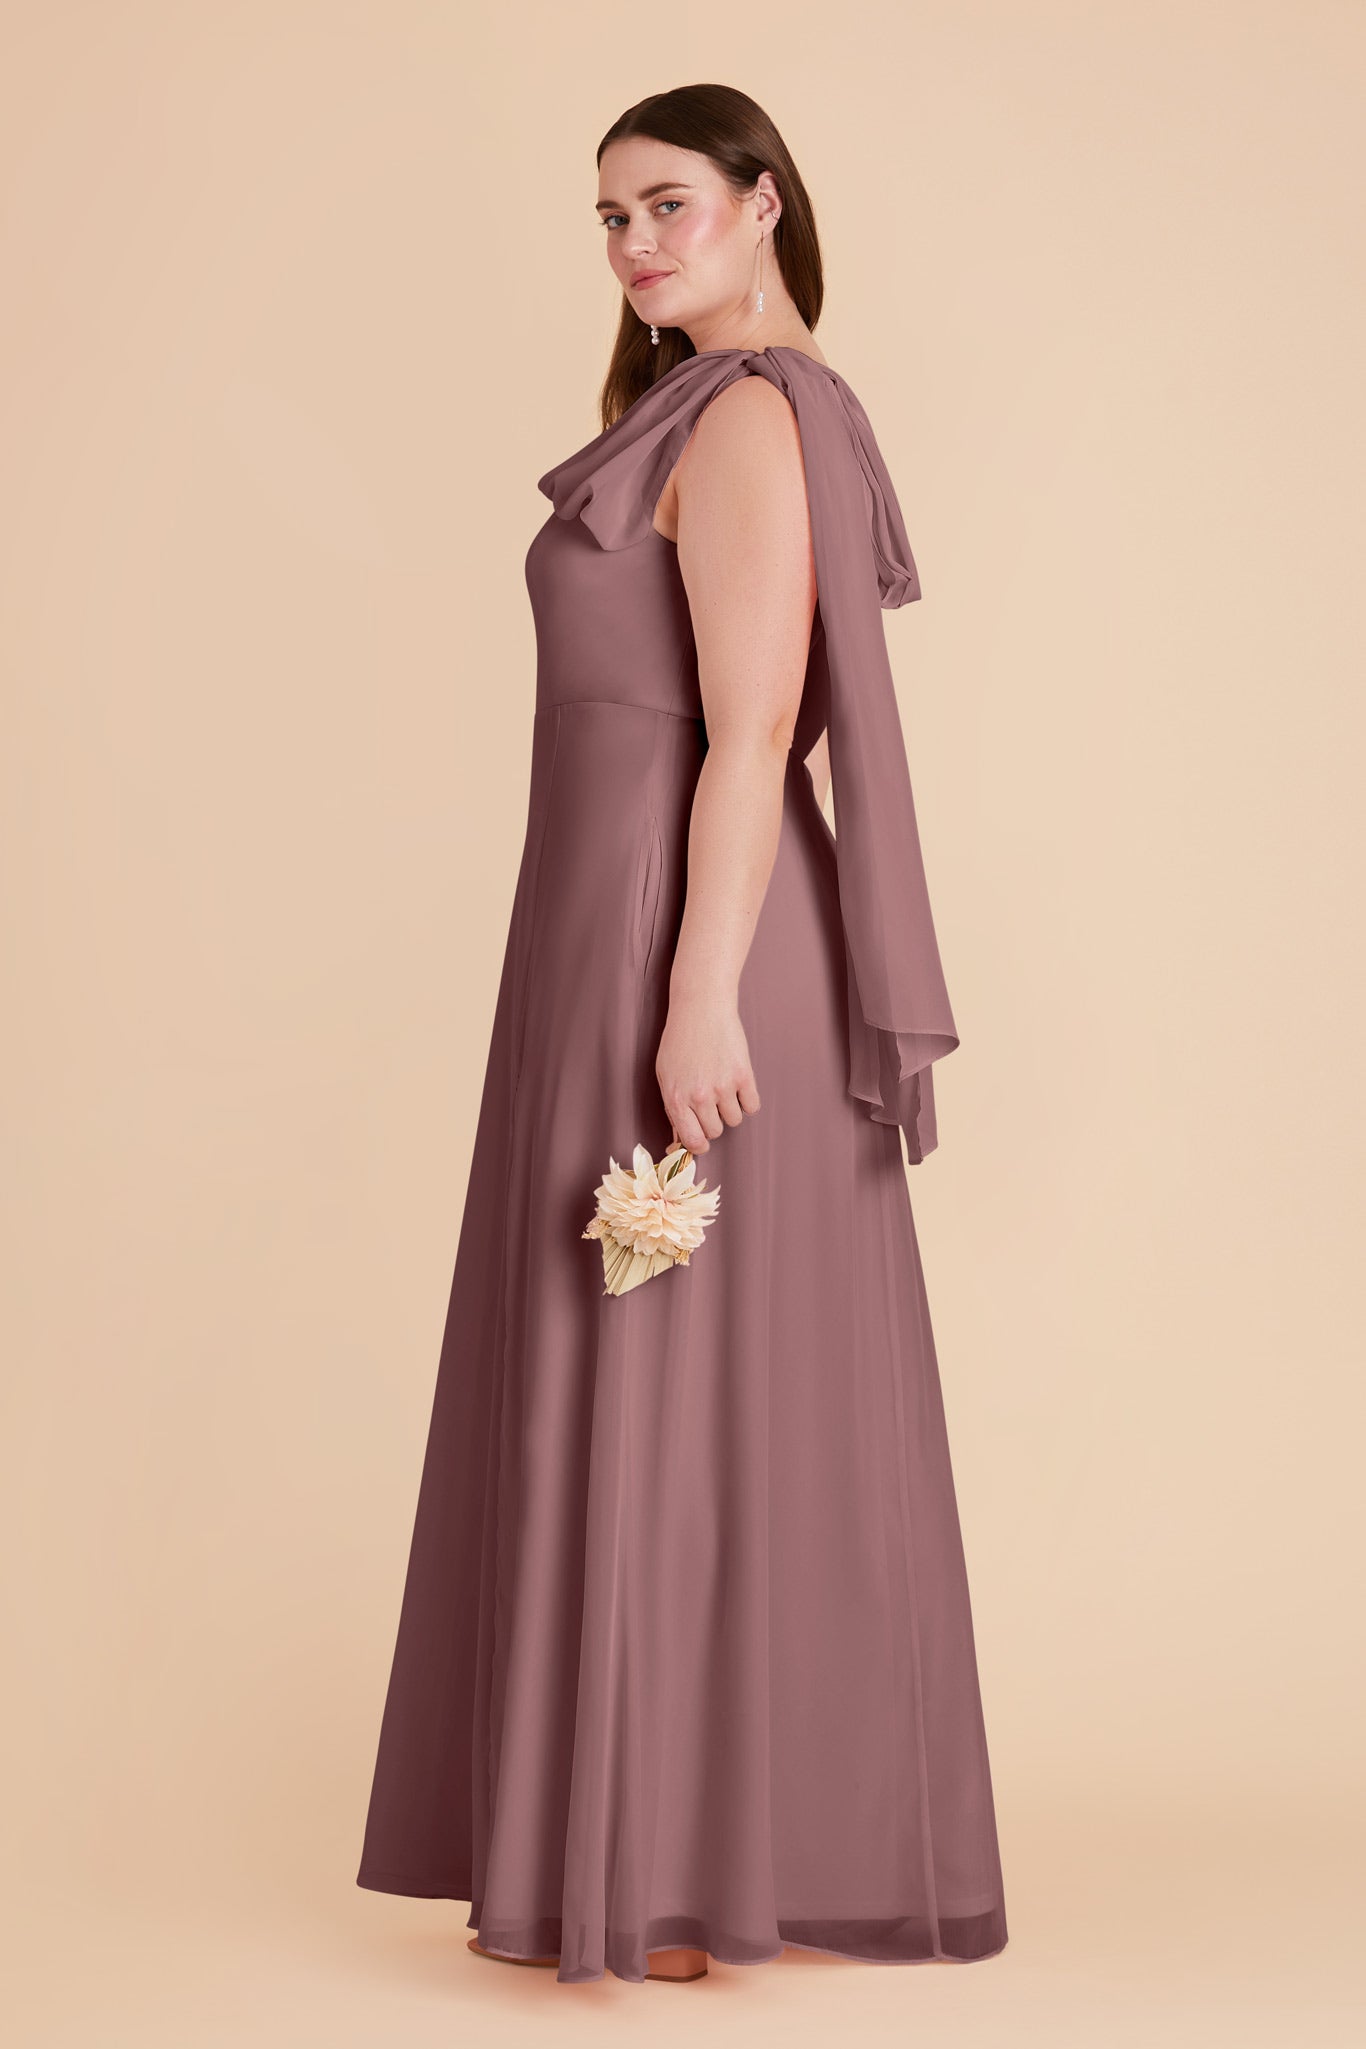 Dark Mauve Melissa Chiffon Dress by Birdy Grey